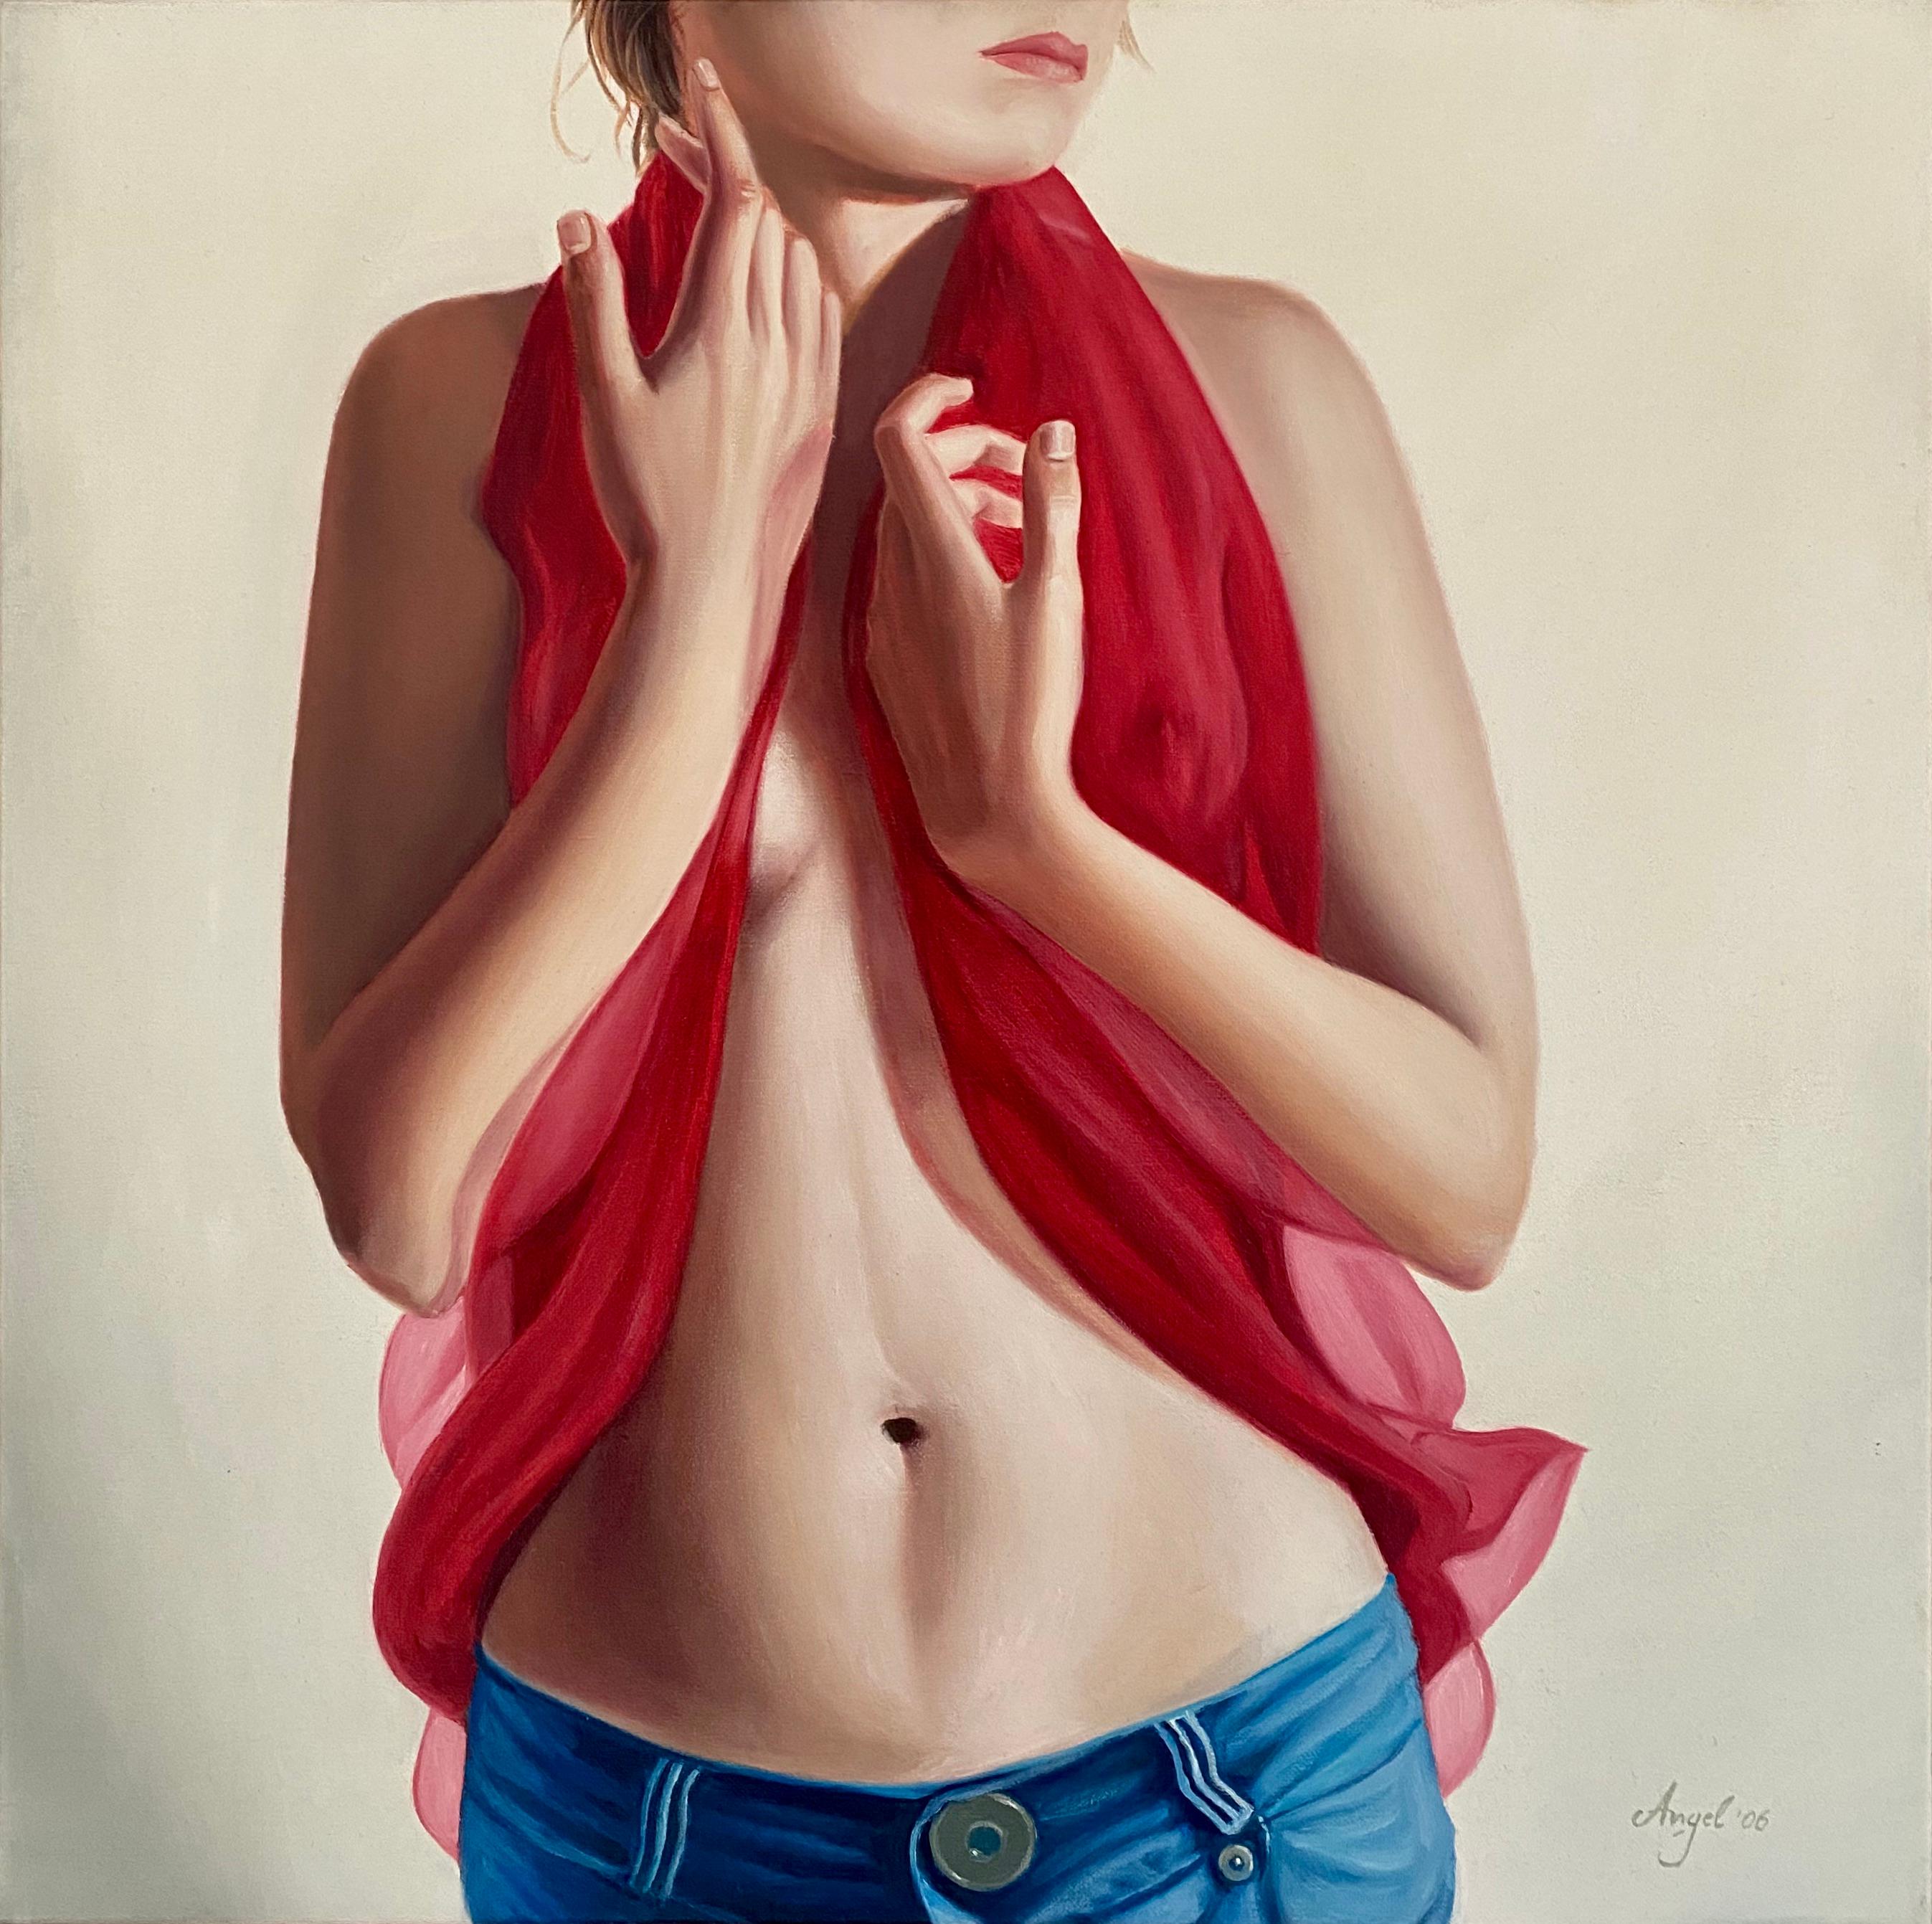 Angel Peychinov Figurative Painting - She VII. 2006, oil canvas, photorealistic, figurative, woman, hyperrealism, skin